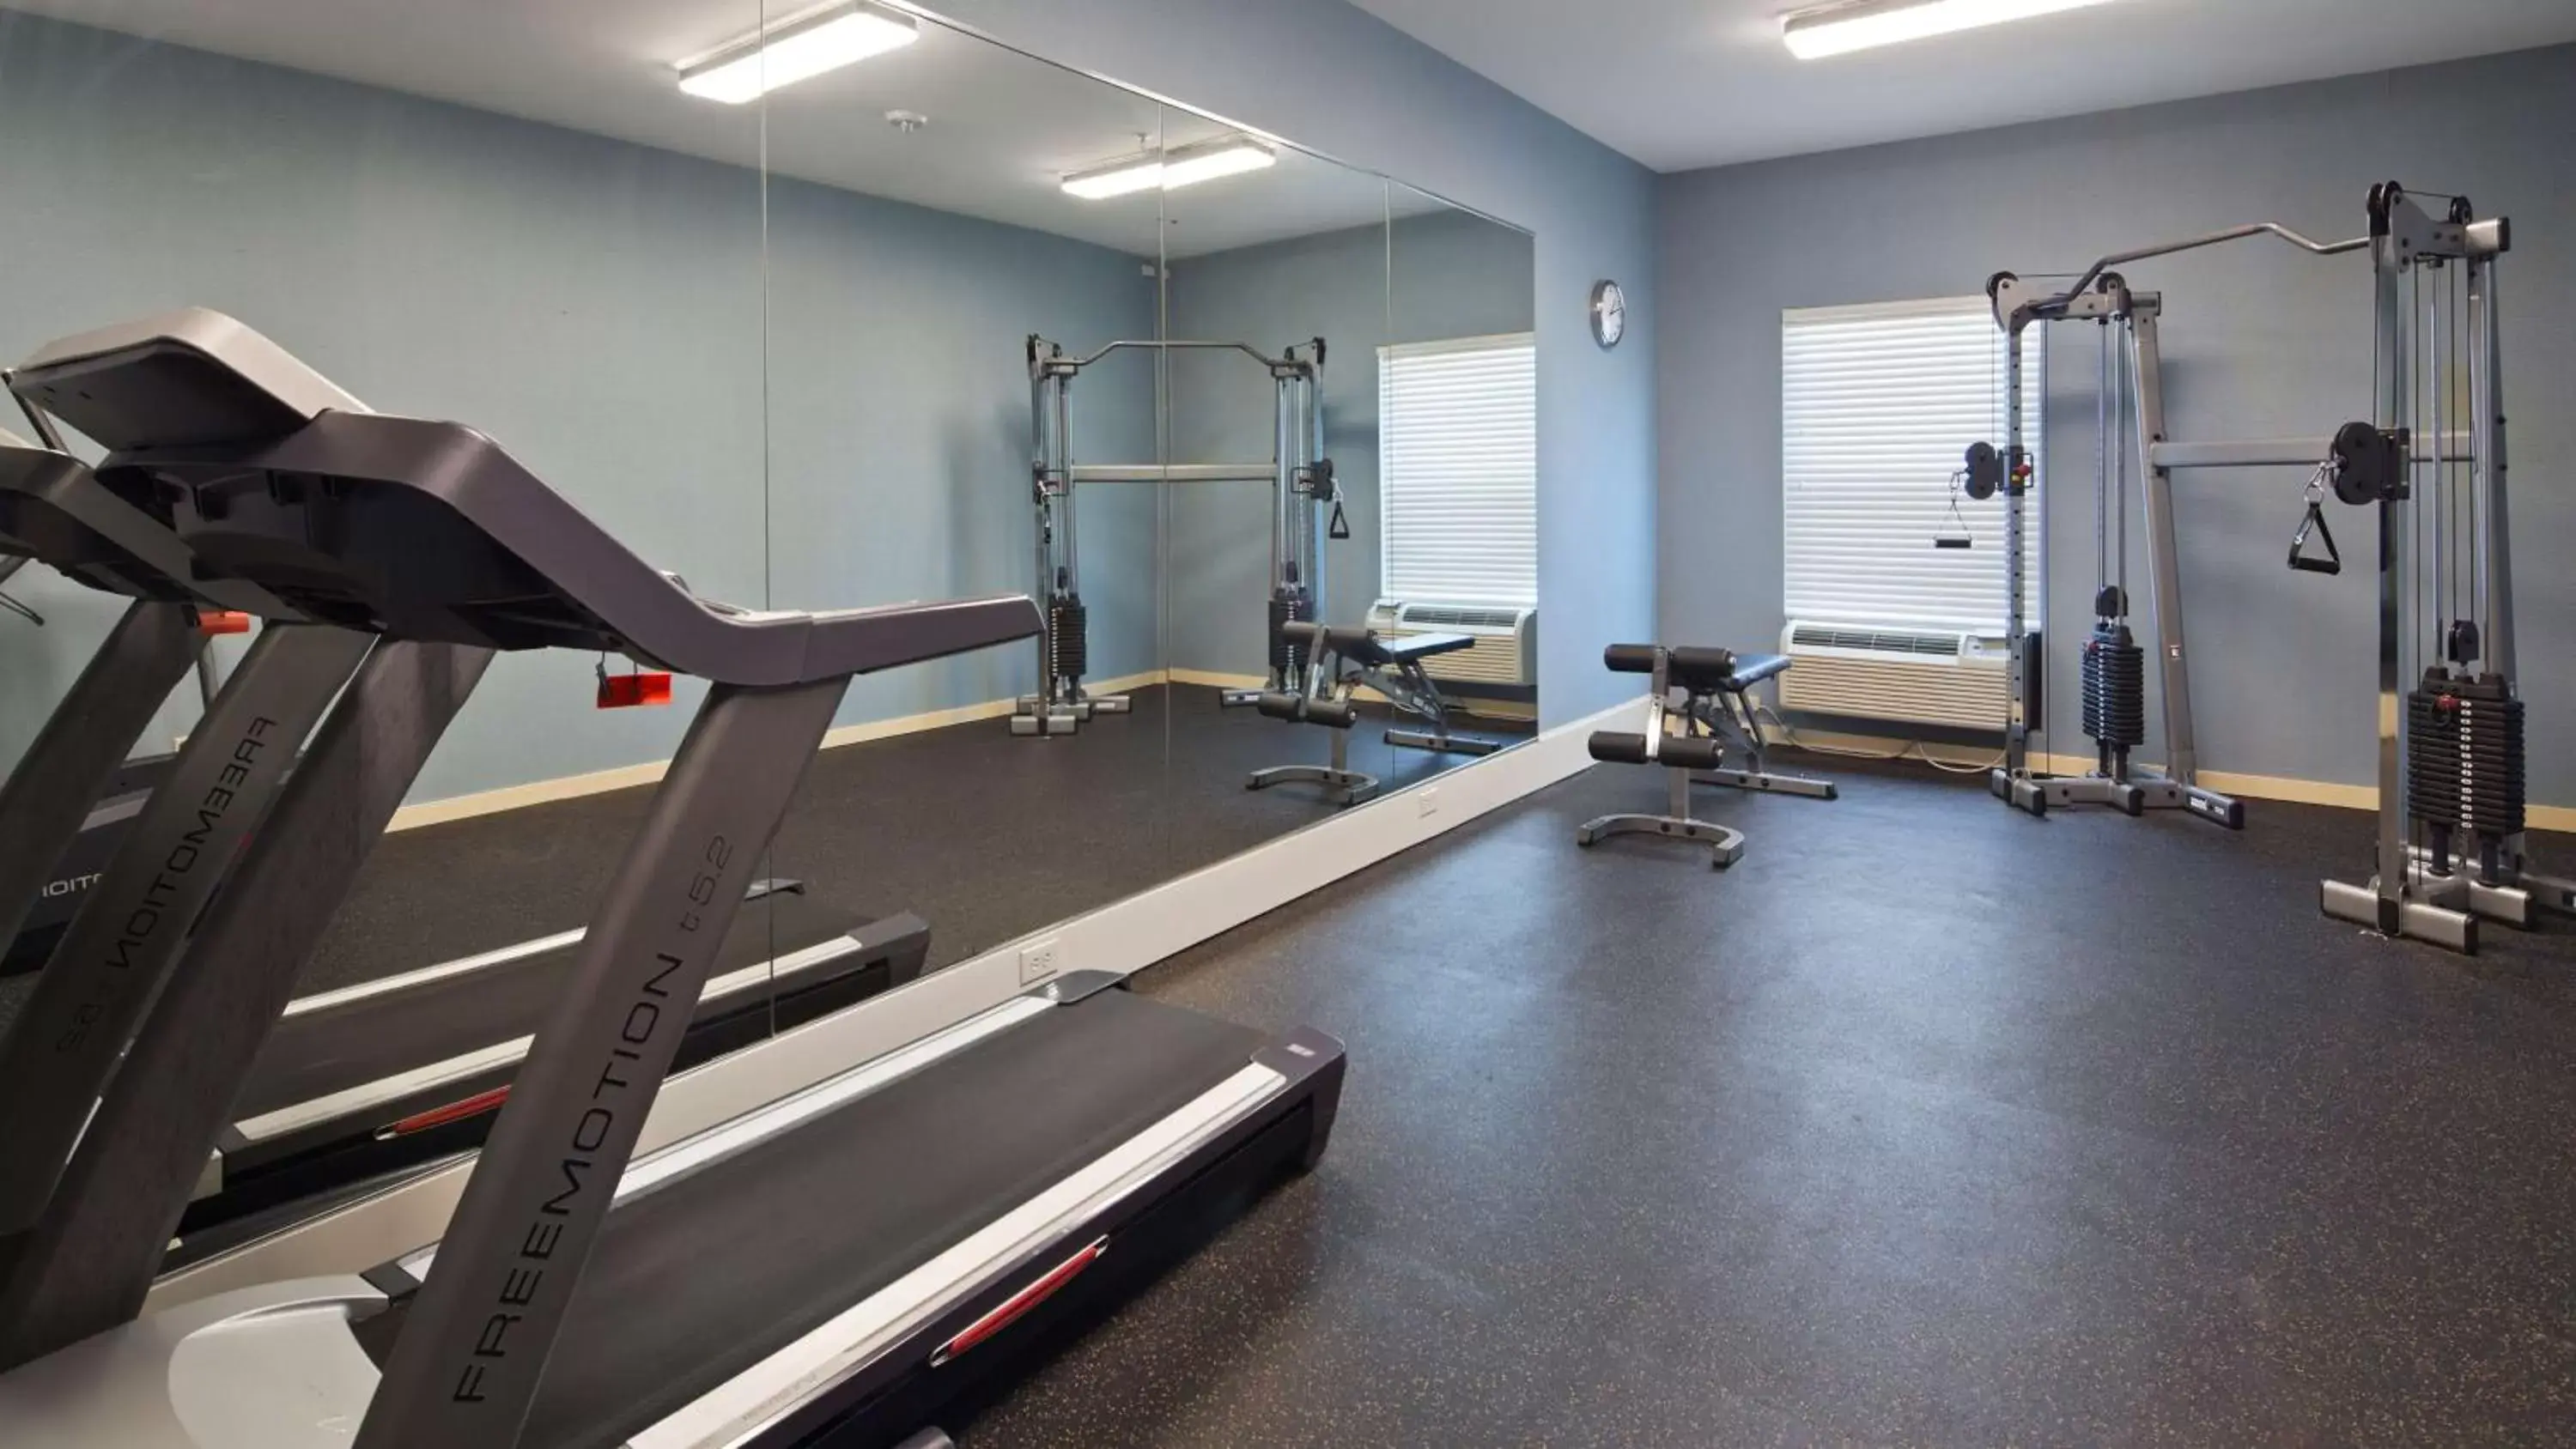 Fitness centre/facilities, Fitness Center/Facilities in Best Western Plus Glen Allen Inn